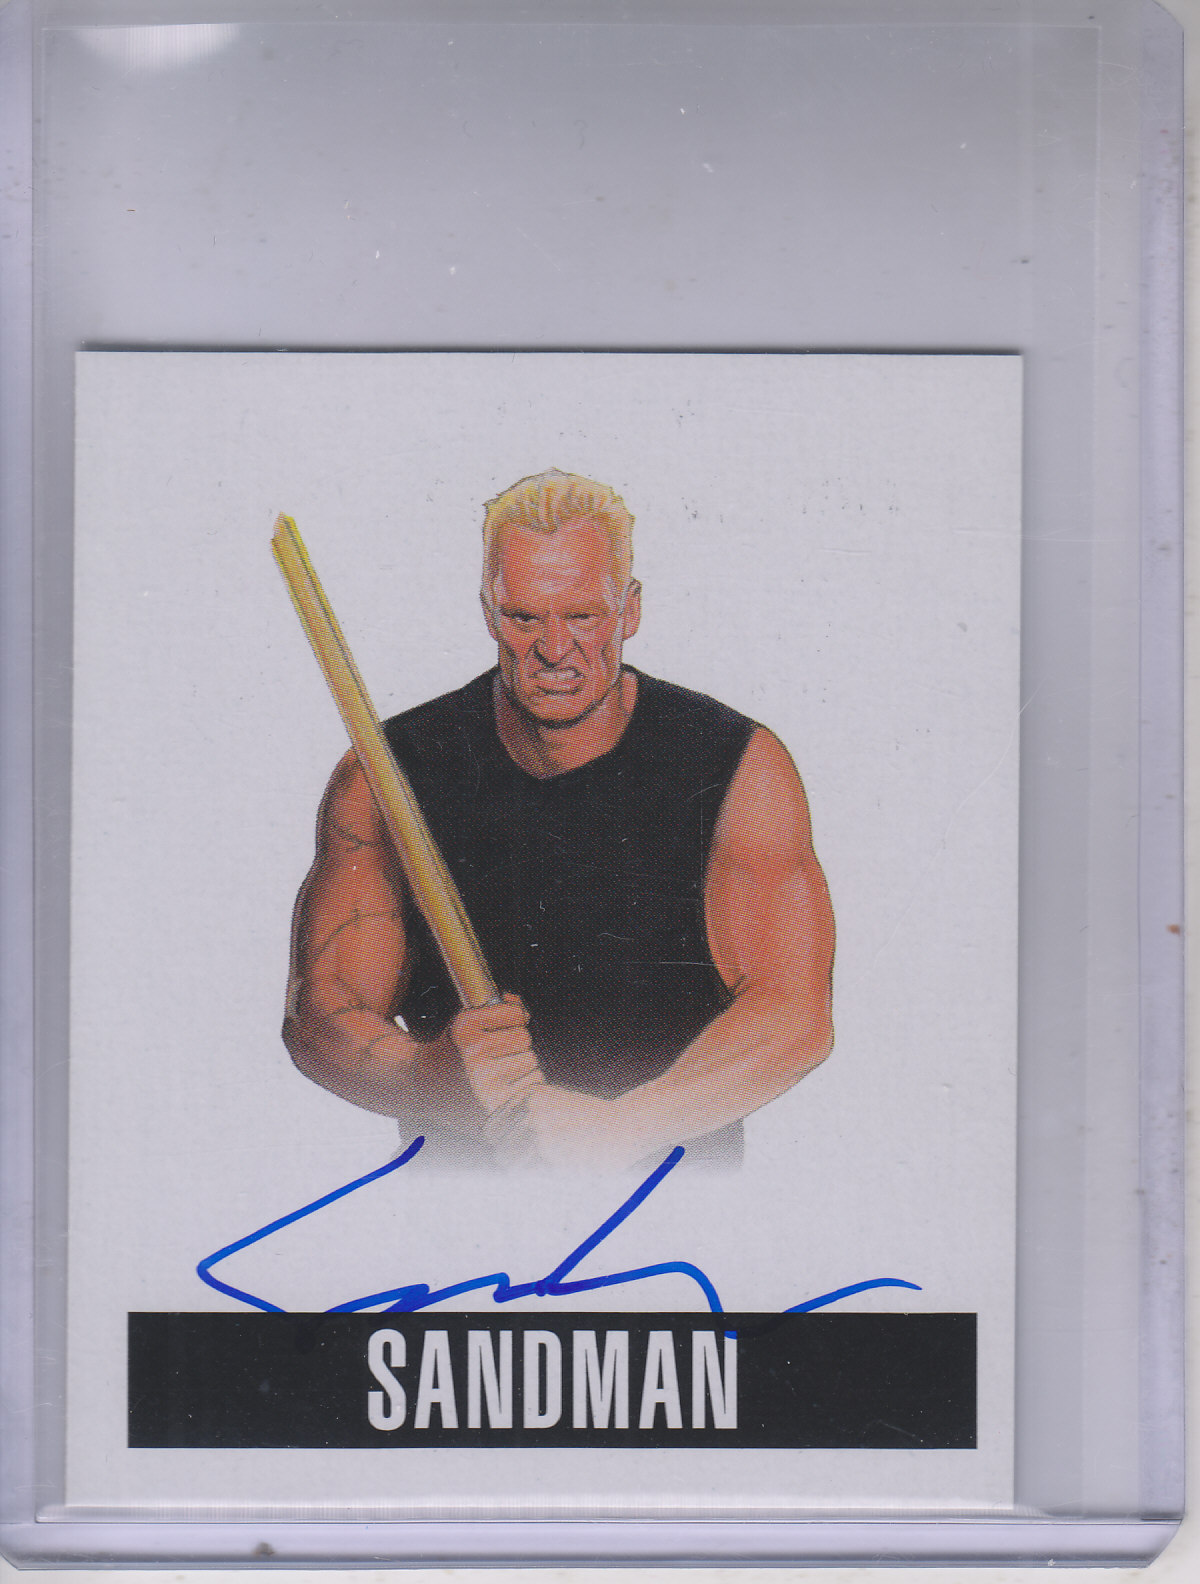 Sandman (Hak) player image